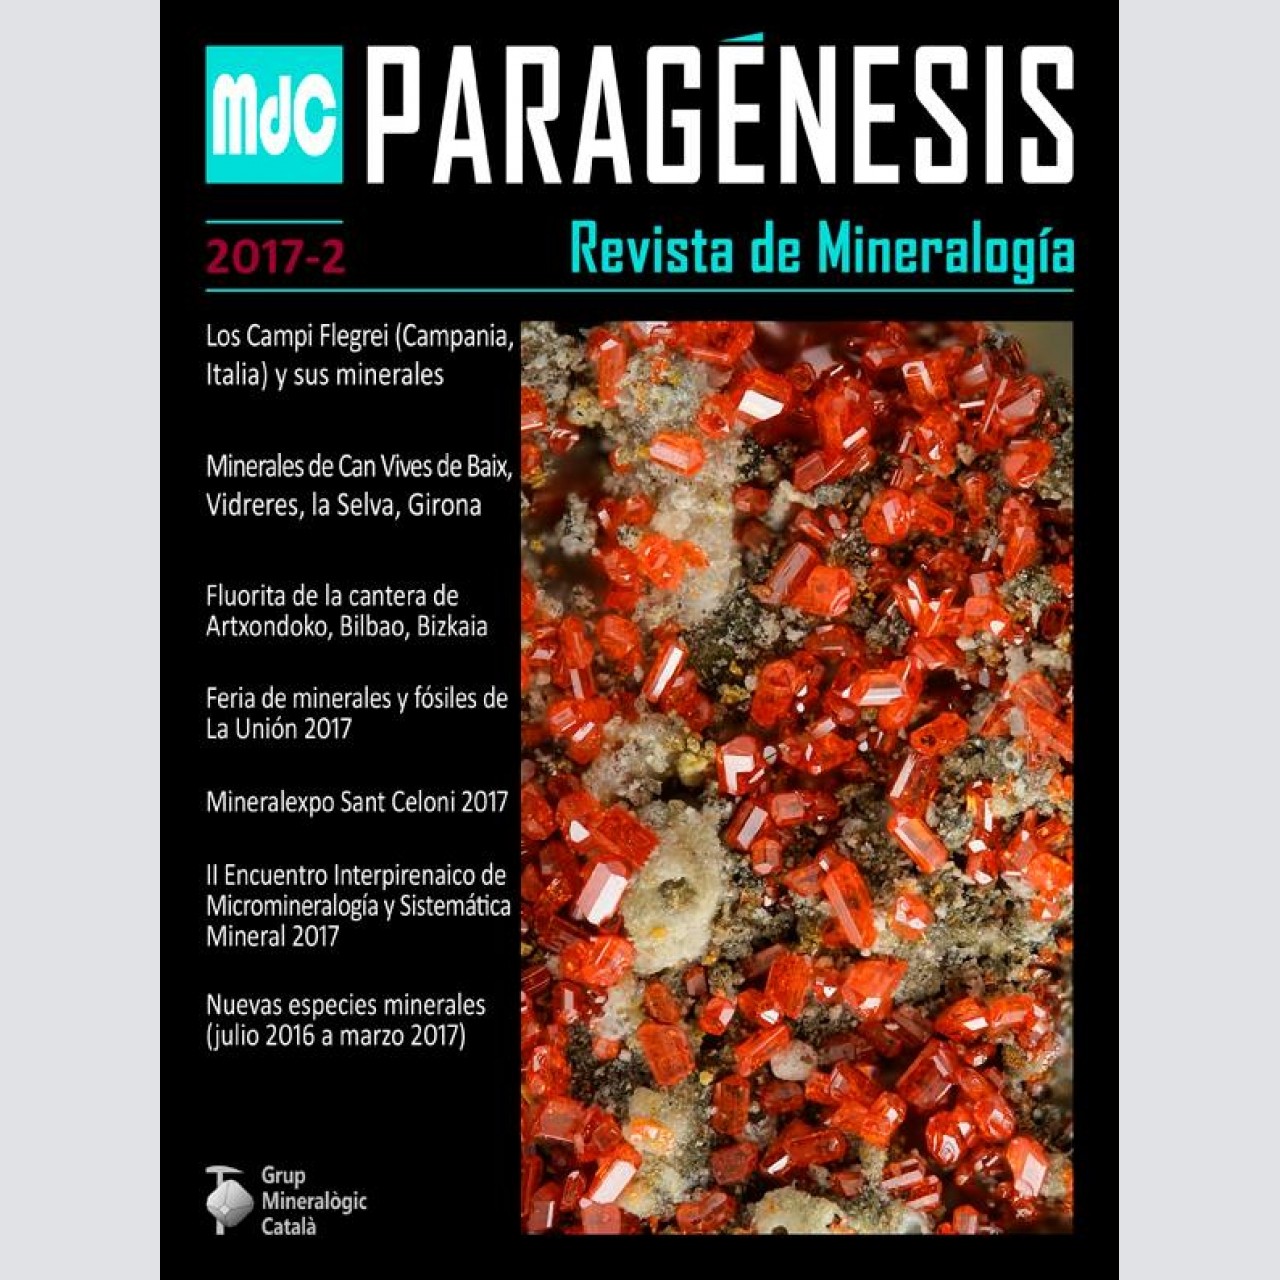 Paragénesis. Revista de Mineralogía (2017-2)